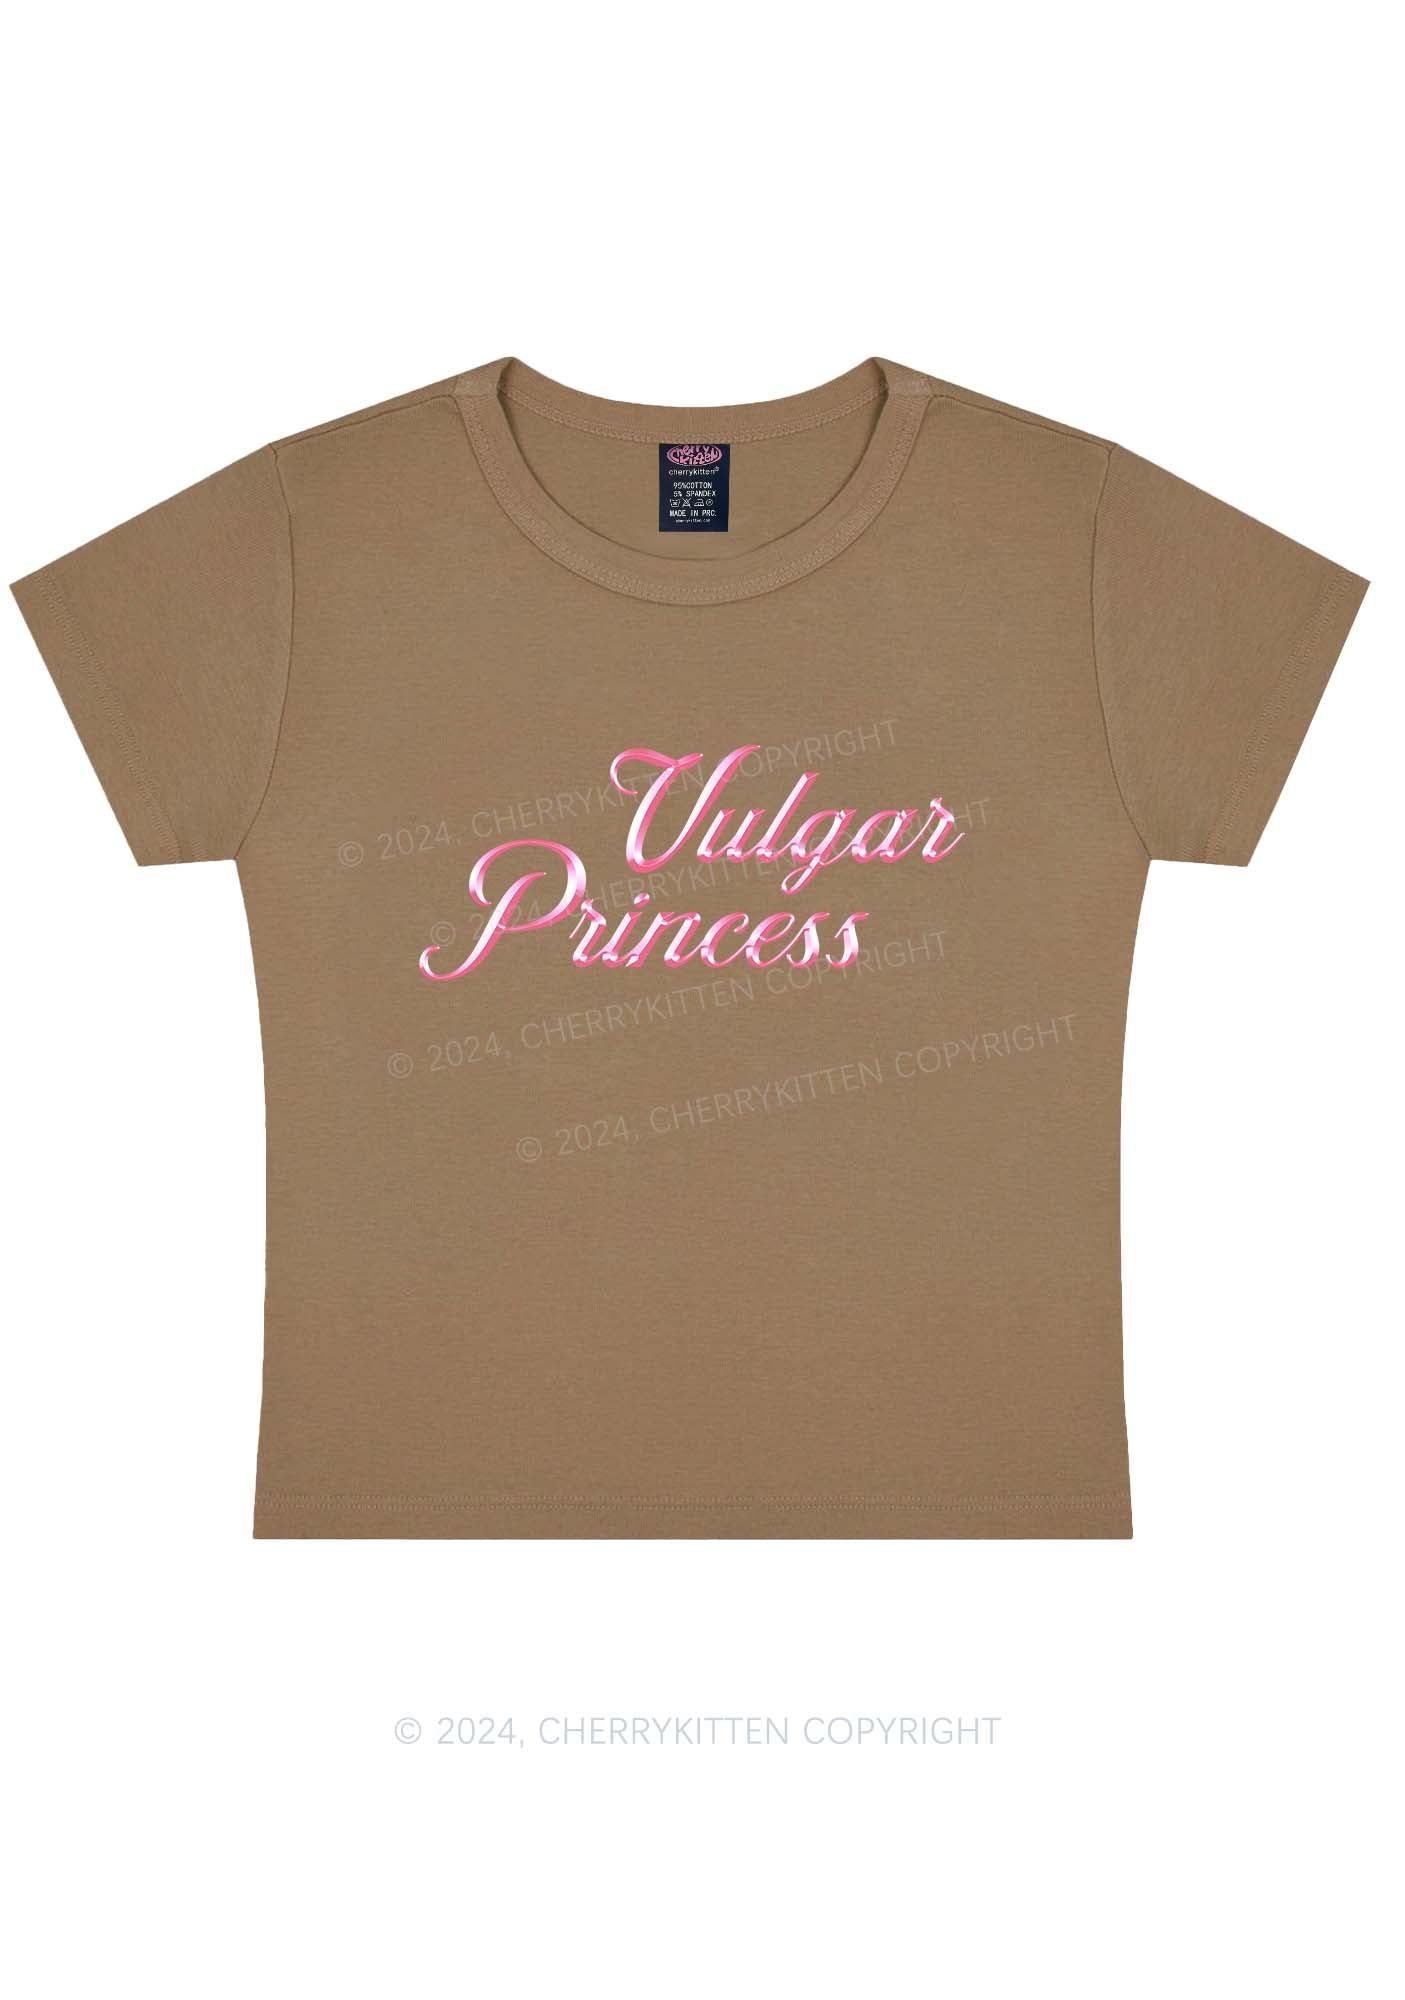 Vulgar Princess Y2K Baby Tee Cherrykitten